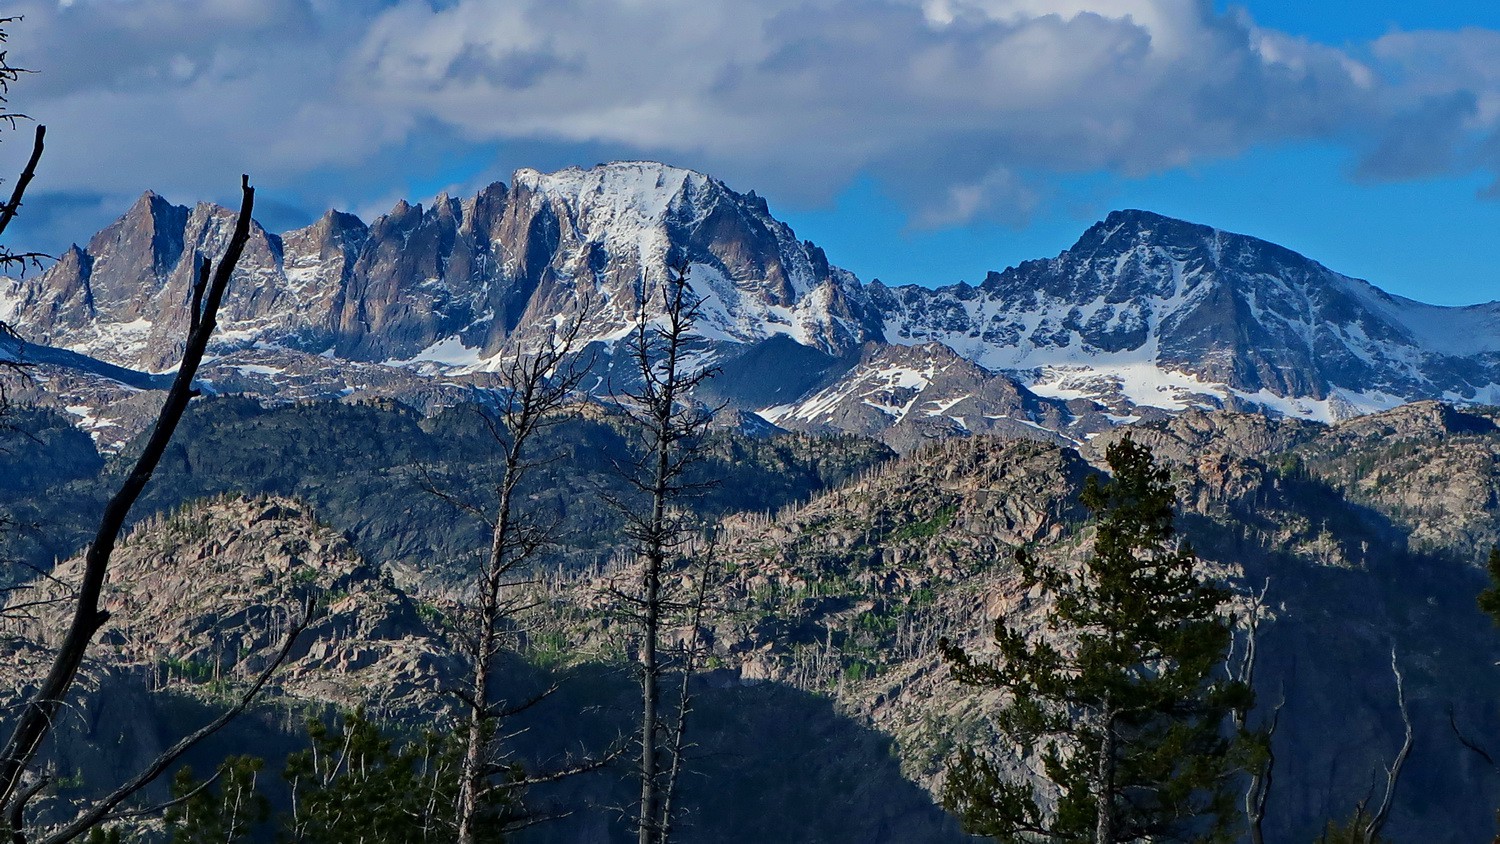 4177 meters high Fremont Peak (center) and 4114 meters high Jackson Peak (right)